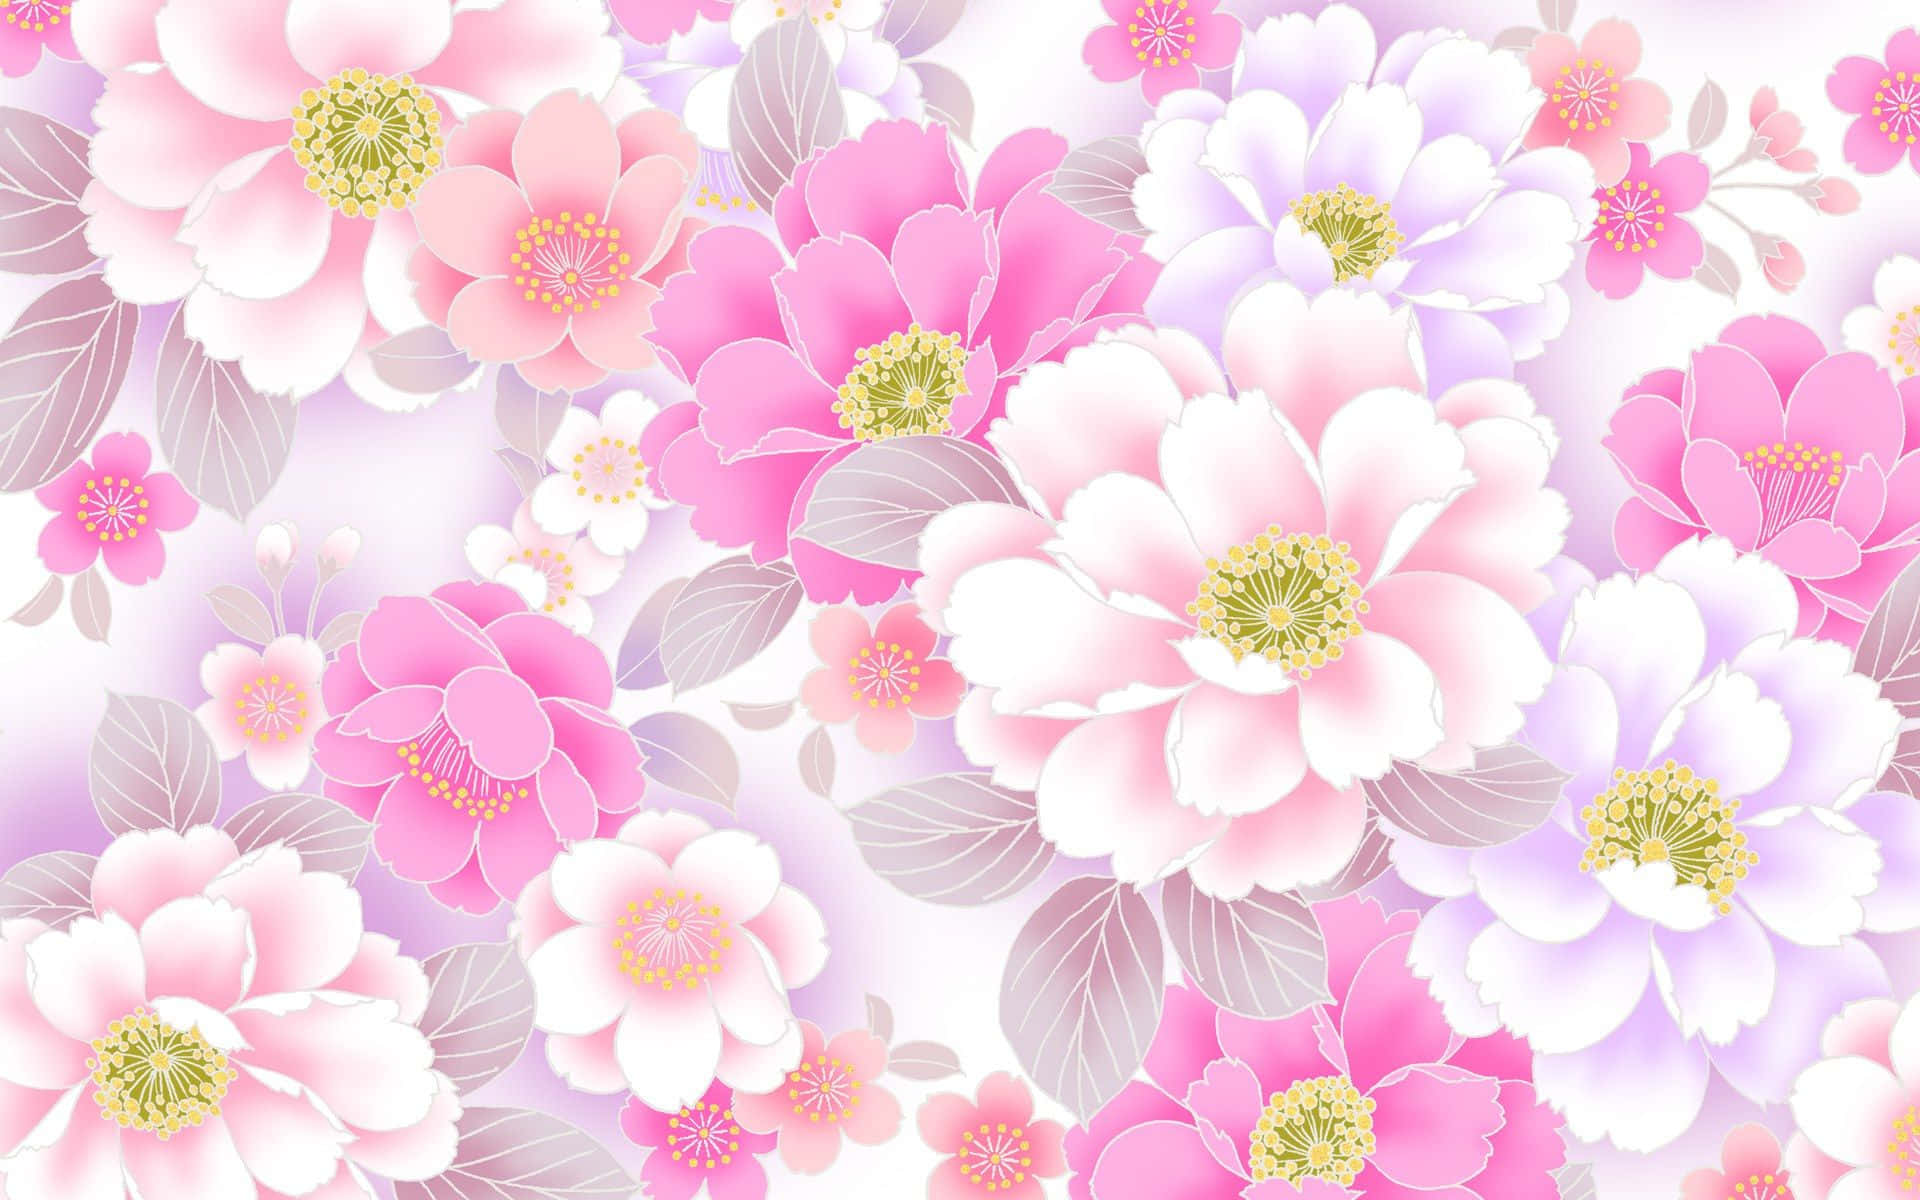 A Captivating Floral Display in Vibrant Colors Wallpaper